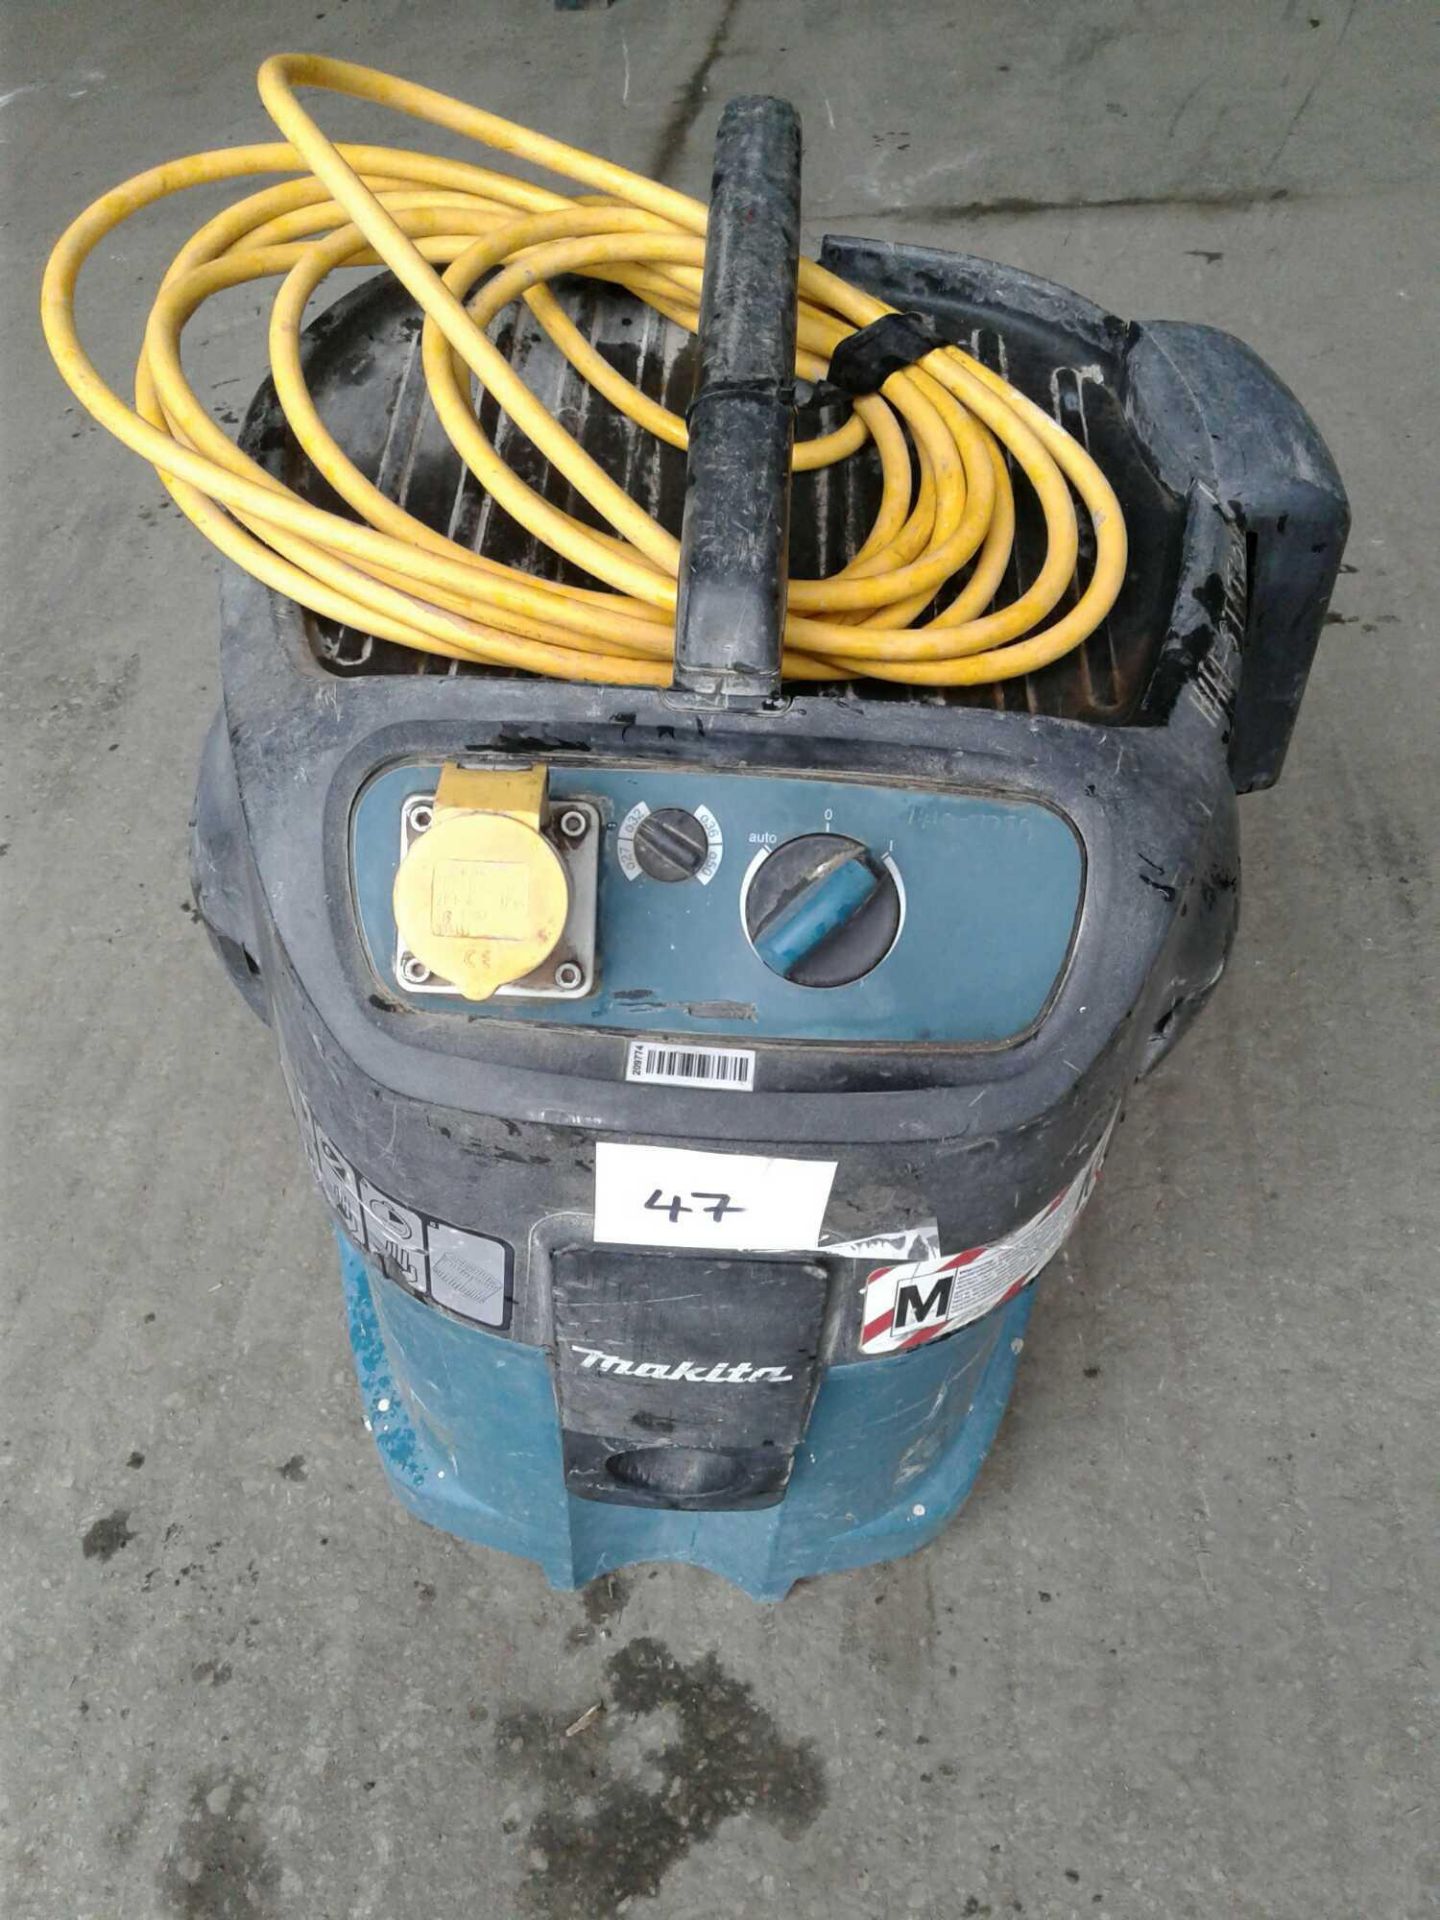 Makita industrial vacuum cleaner